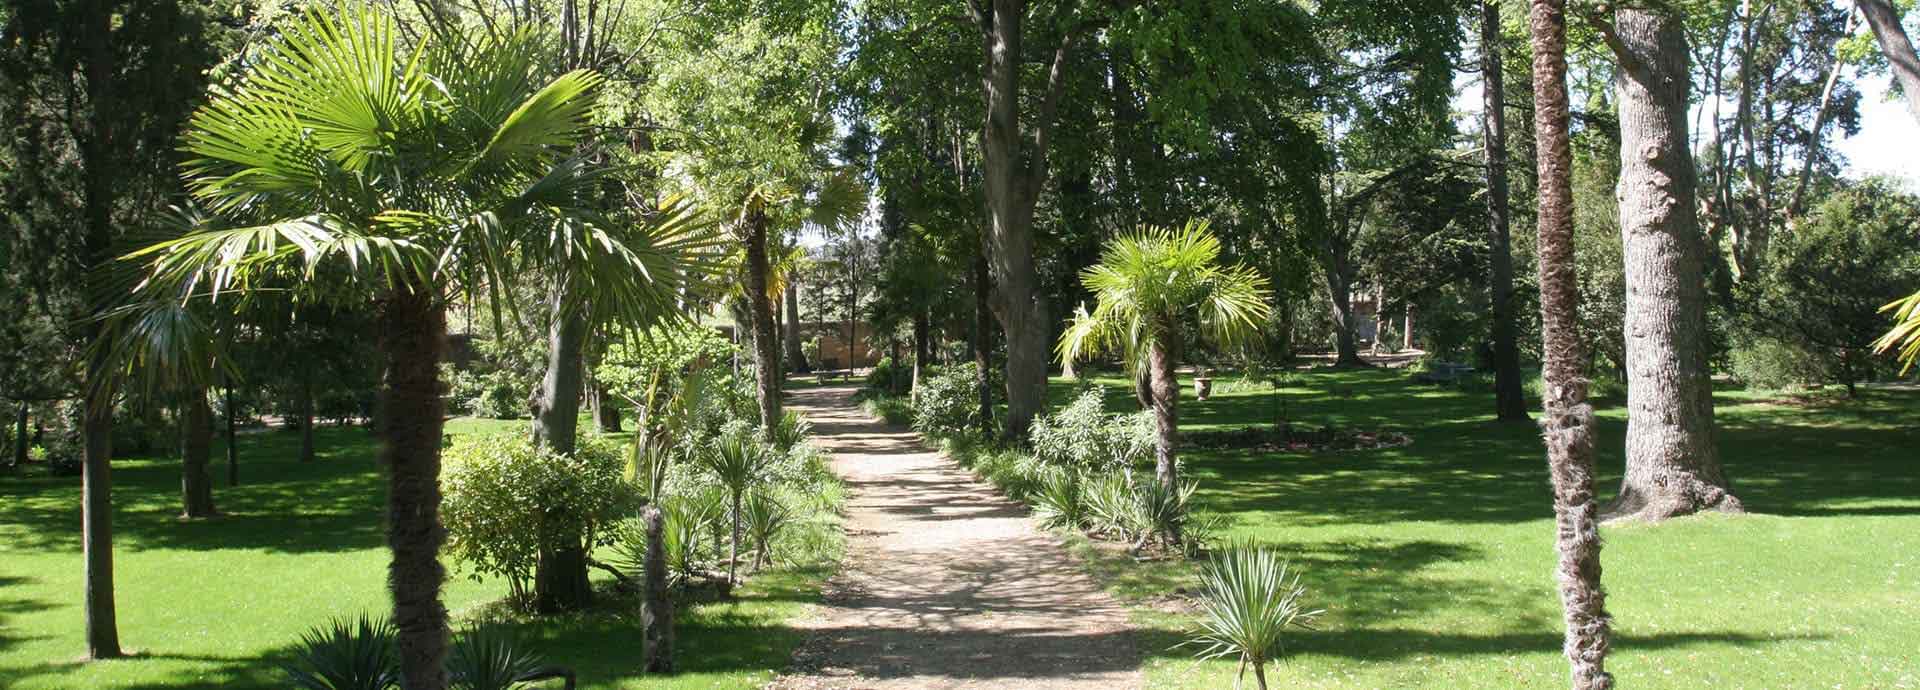 De tuin van Domaine de la Vernède, gîte verhuur tussen Béziers en Narbonne